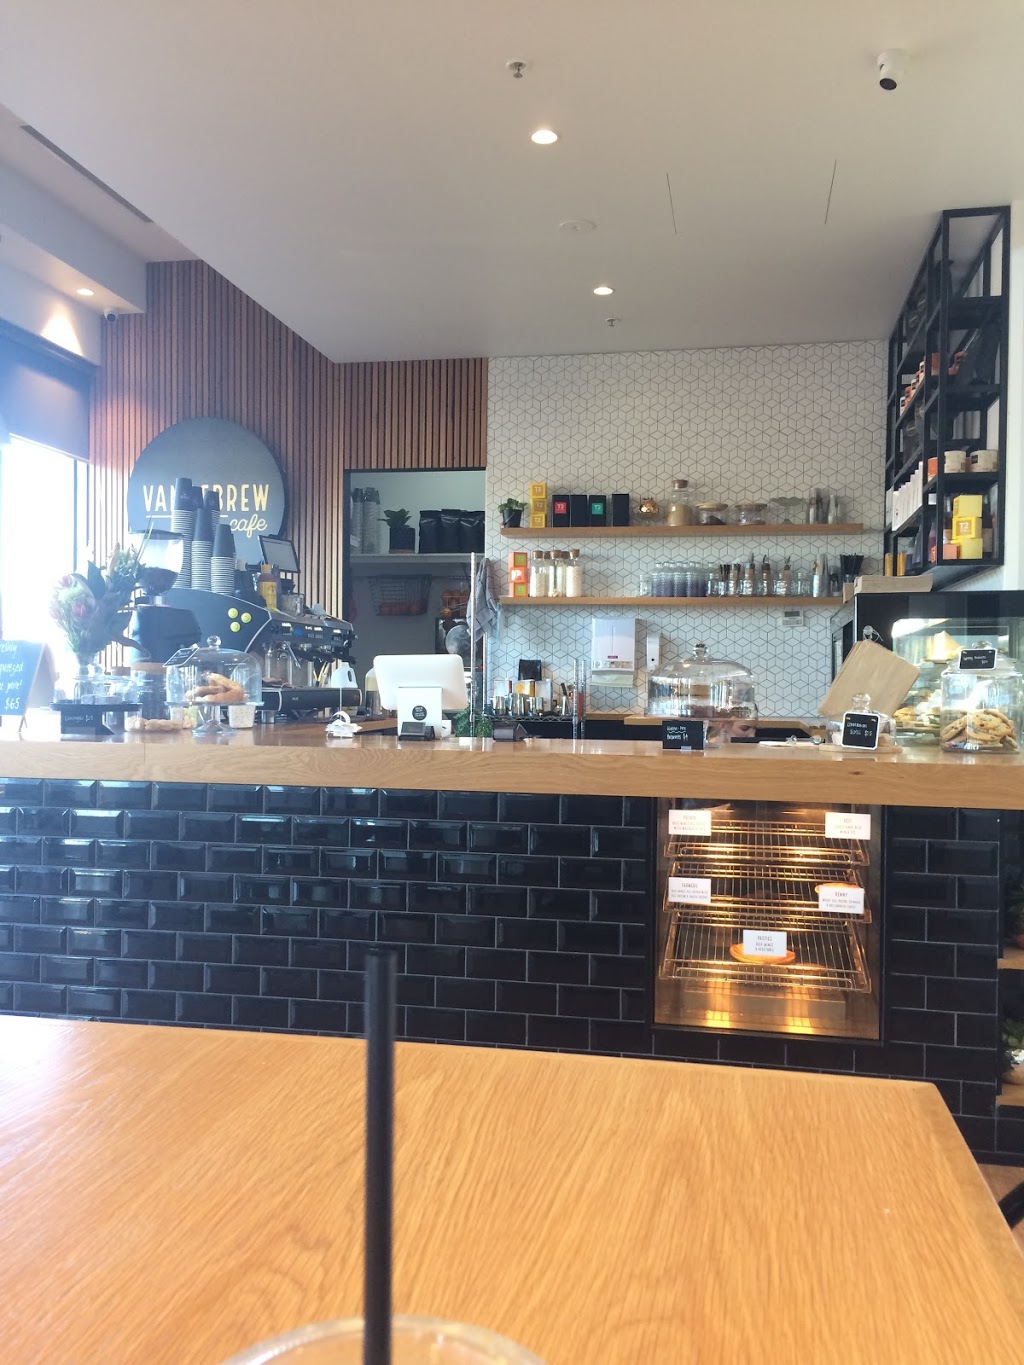 Vandebrew Cafe | Shop7/1/9 Gateway Rd, Warrnambool VIC 3280, Australia